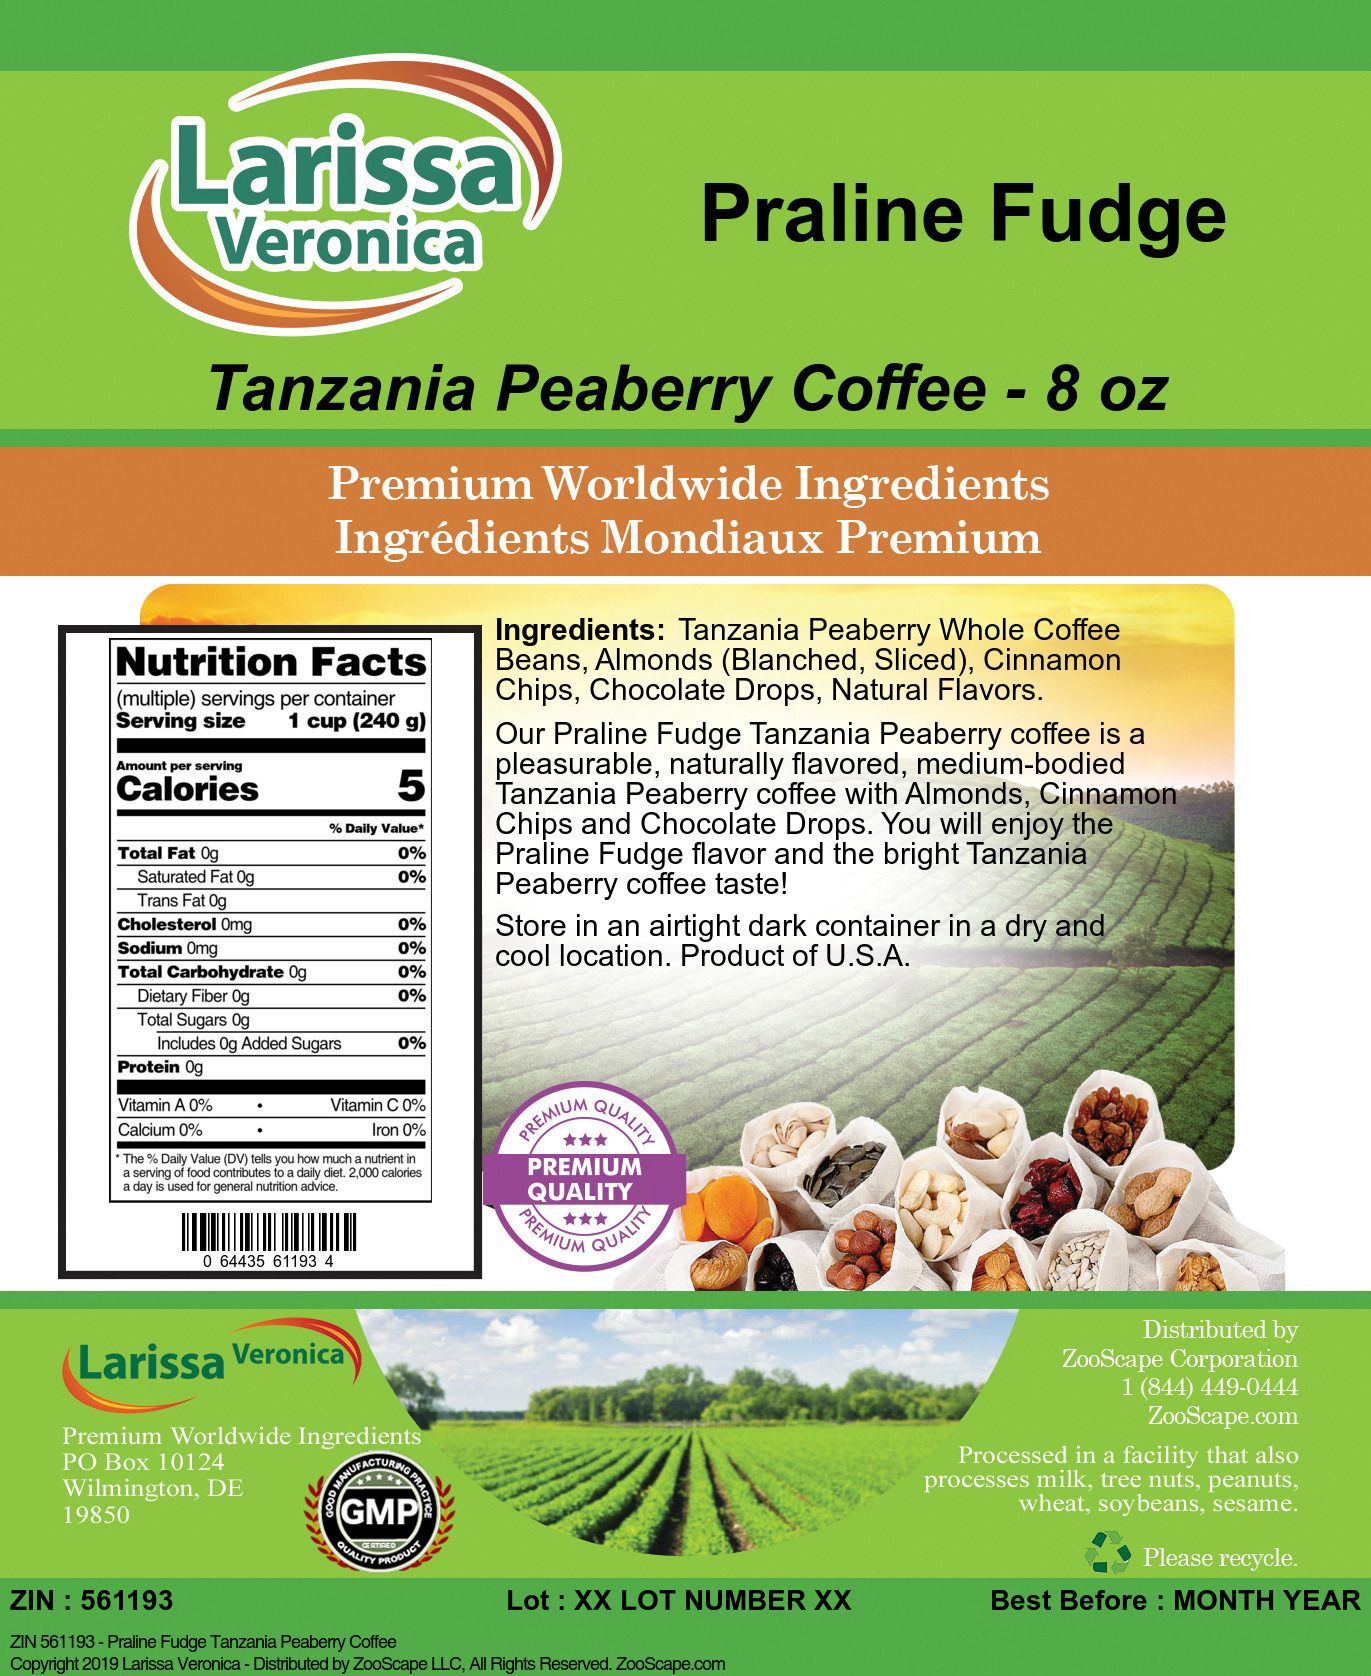 Praline Fudge Tanzania Peaberry Coffee - Label